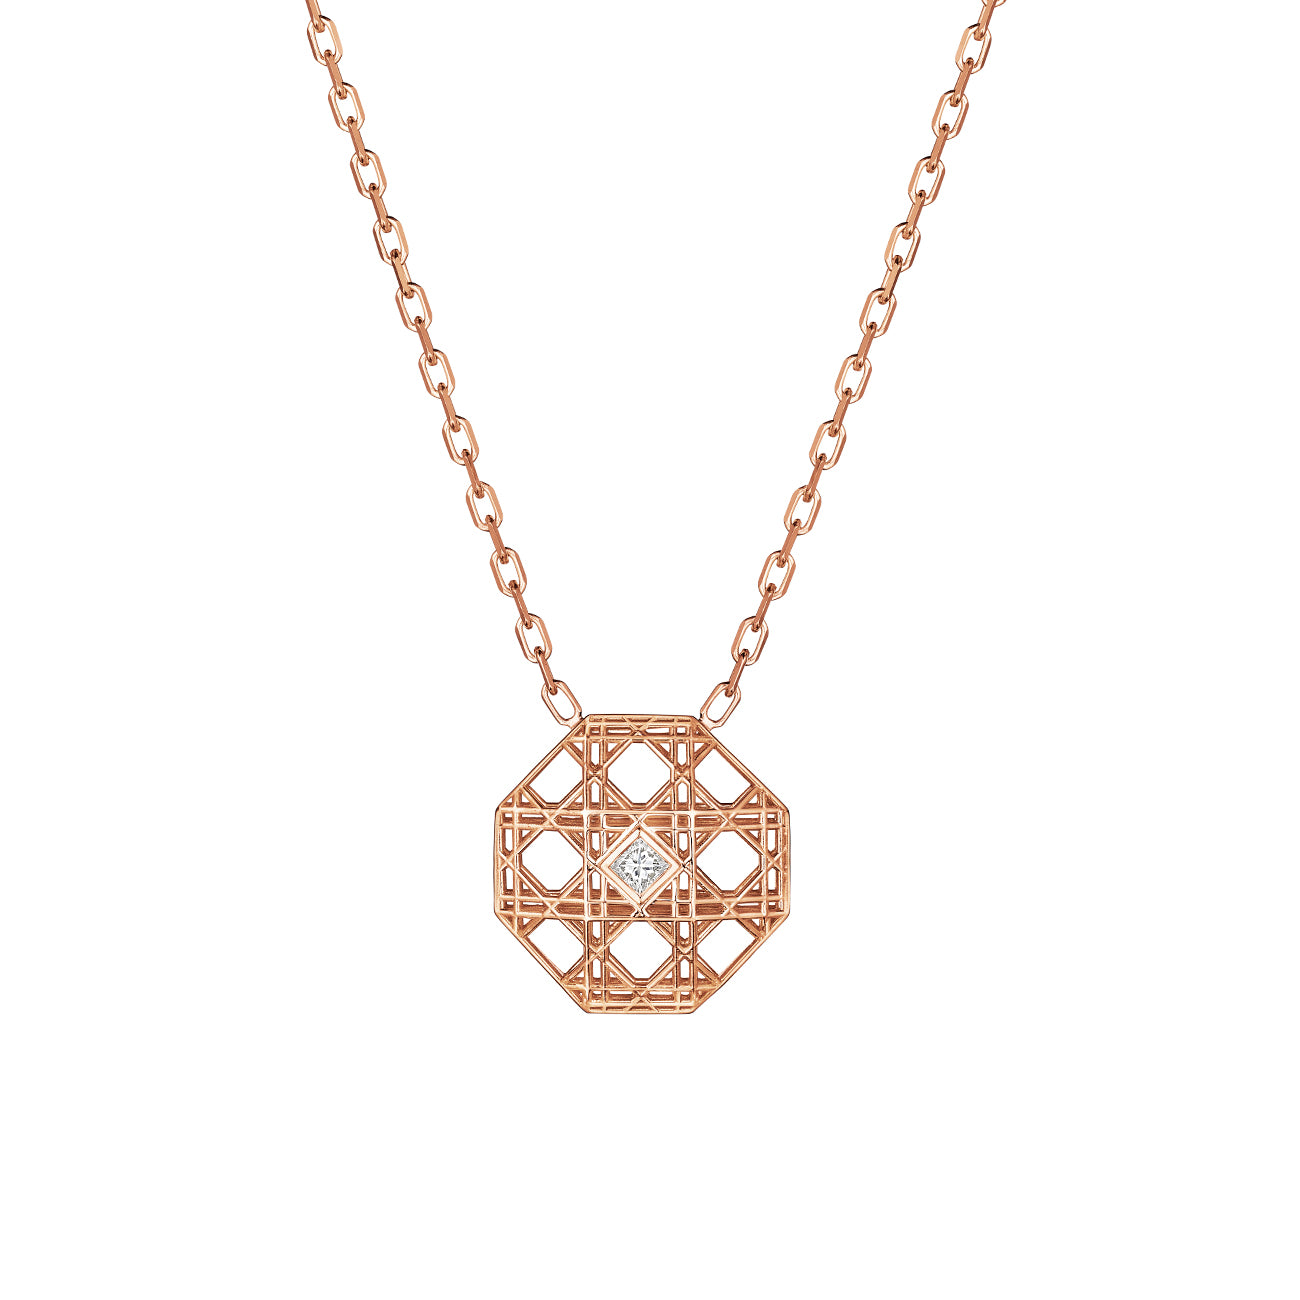 DouDou Pendant necklace, 18K Rose Gold and Princess Cut Diamond